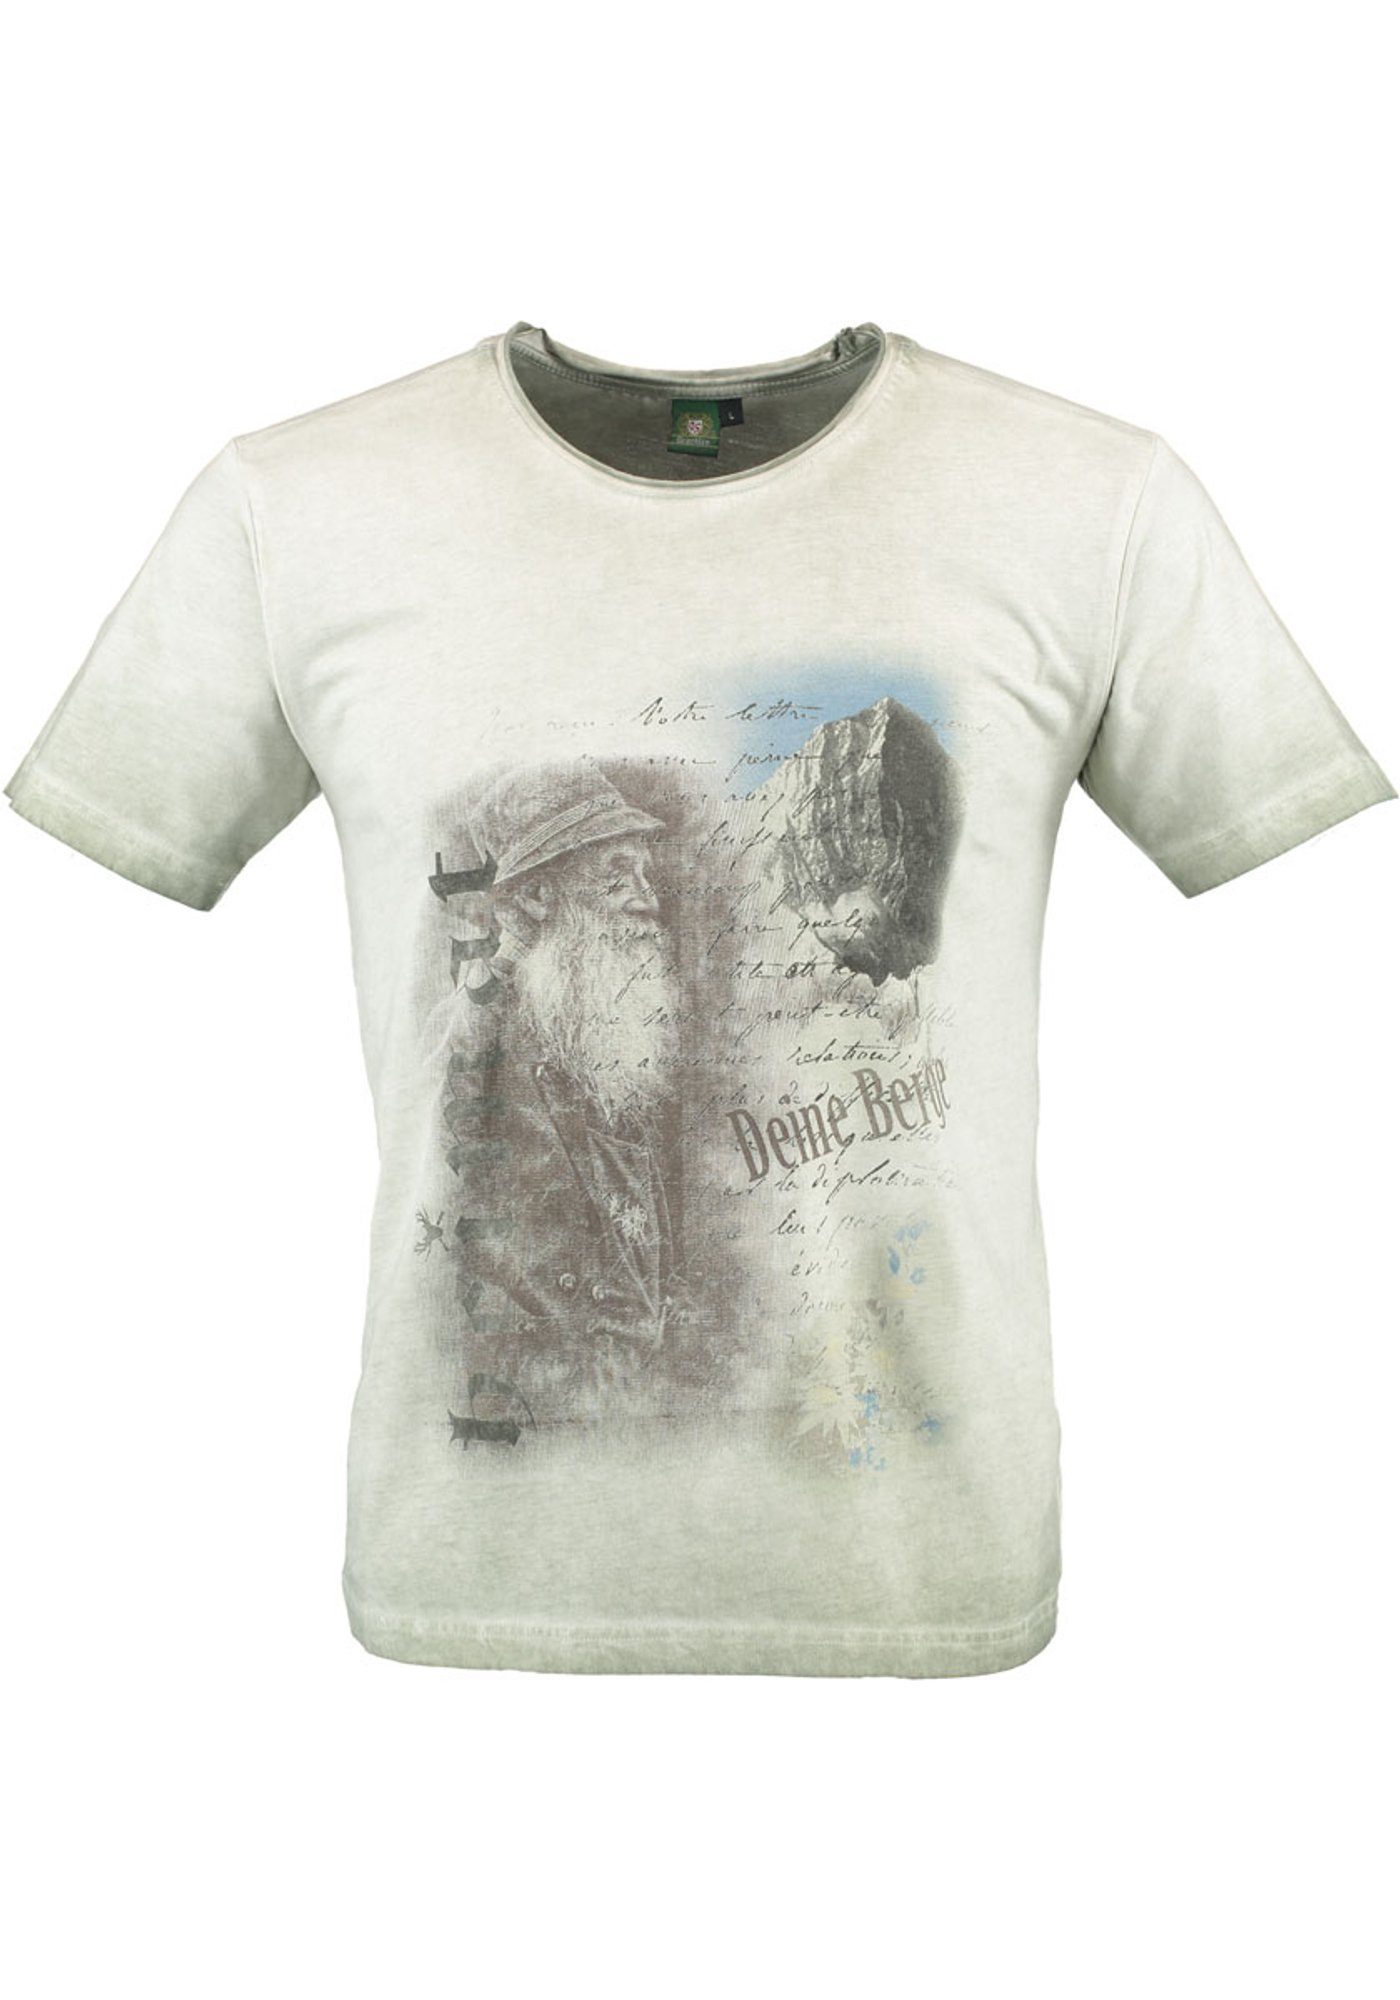 Kurzarm Motivdruck khaki/schlamm mit Trachtenshirt OS-Trachten Praiol T-Shirt